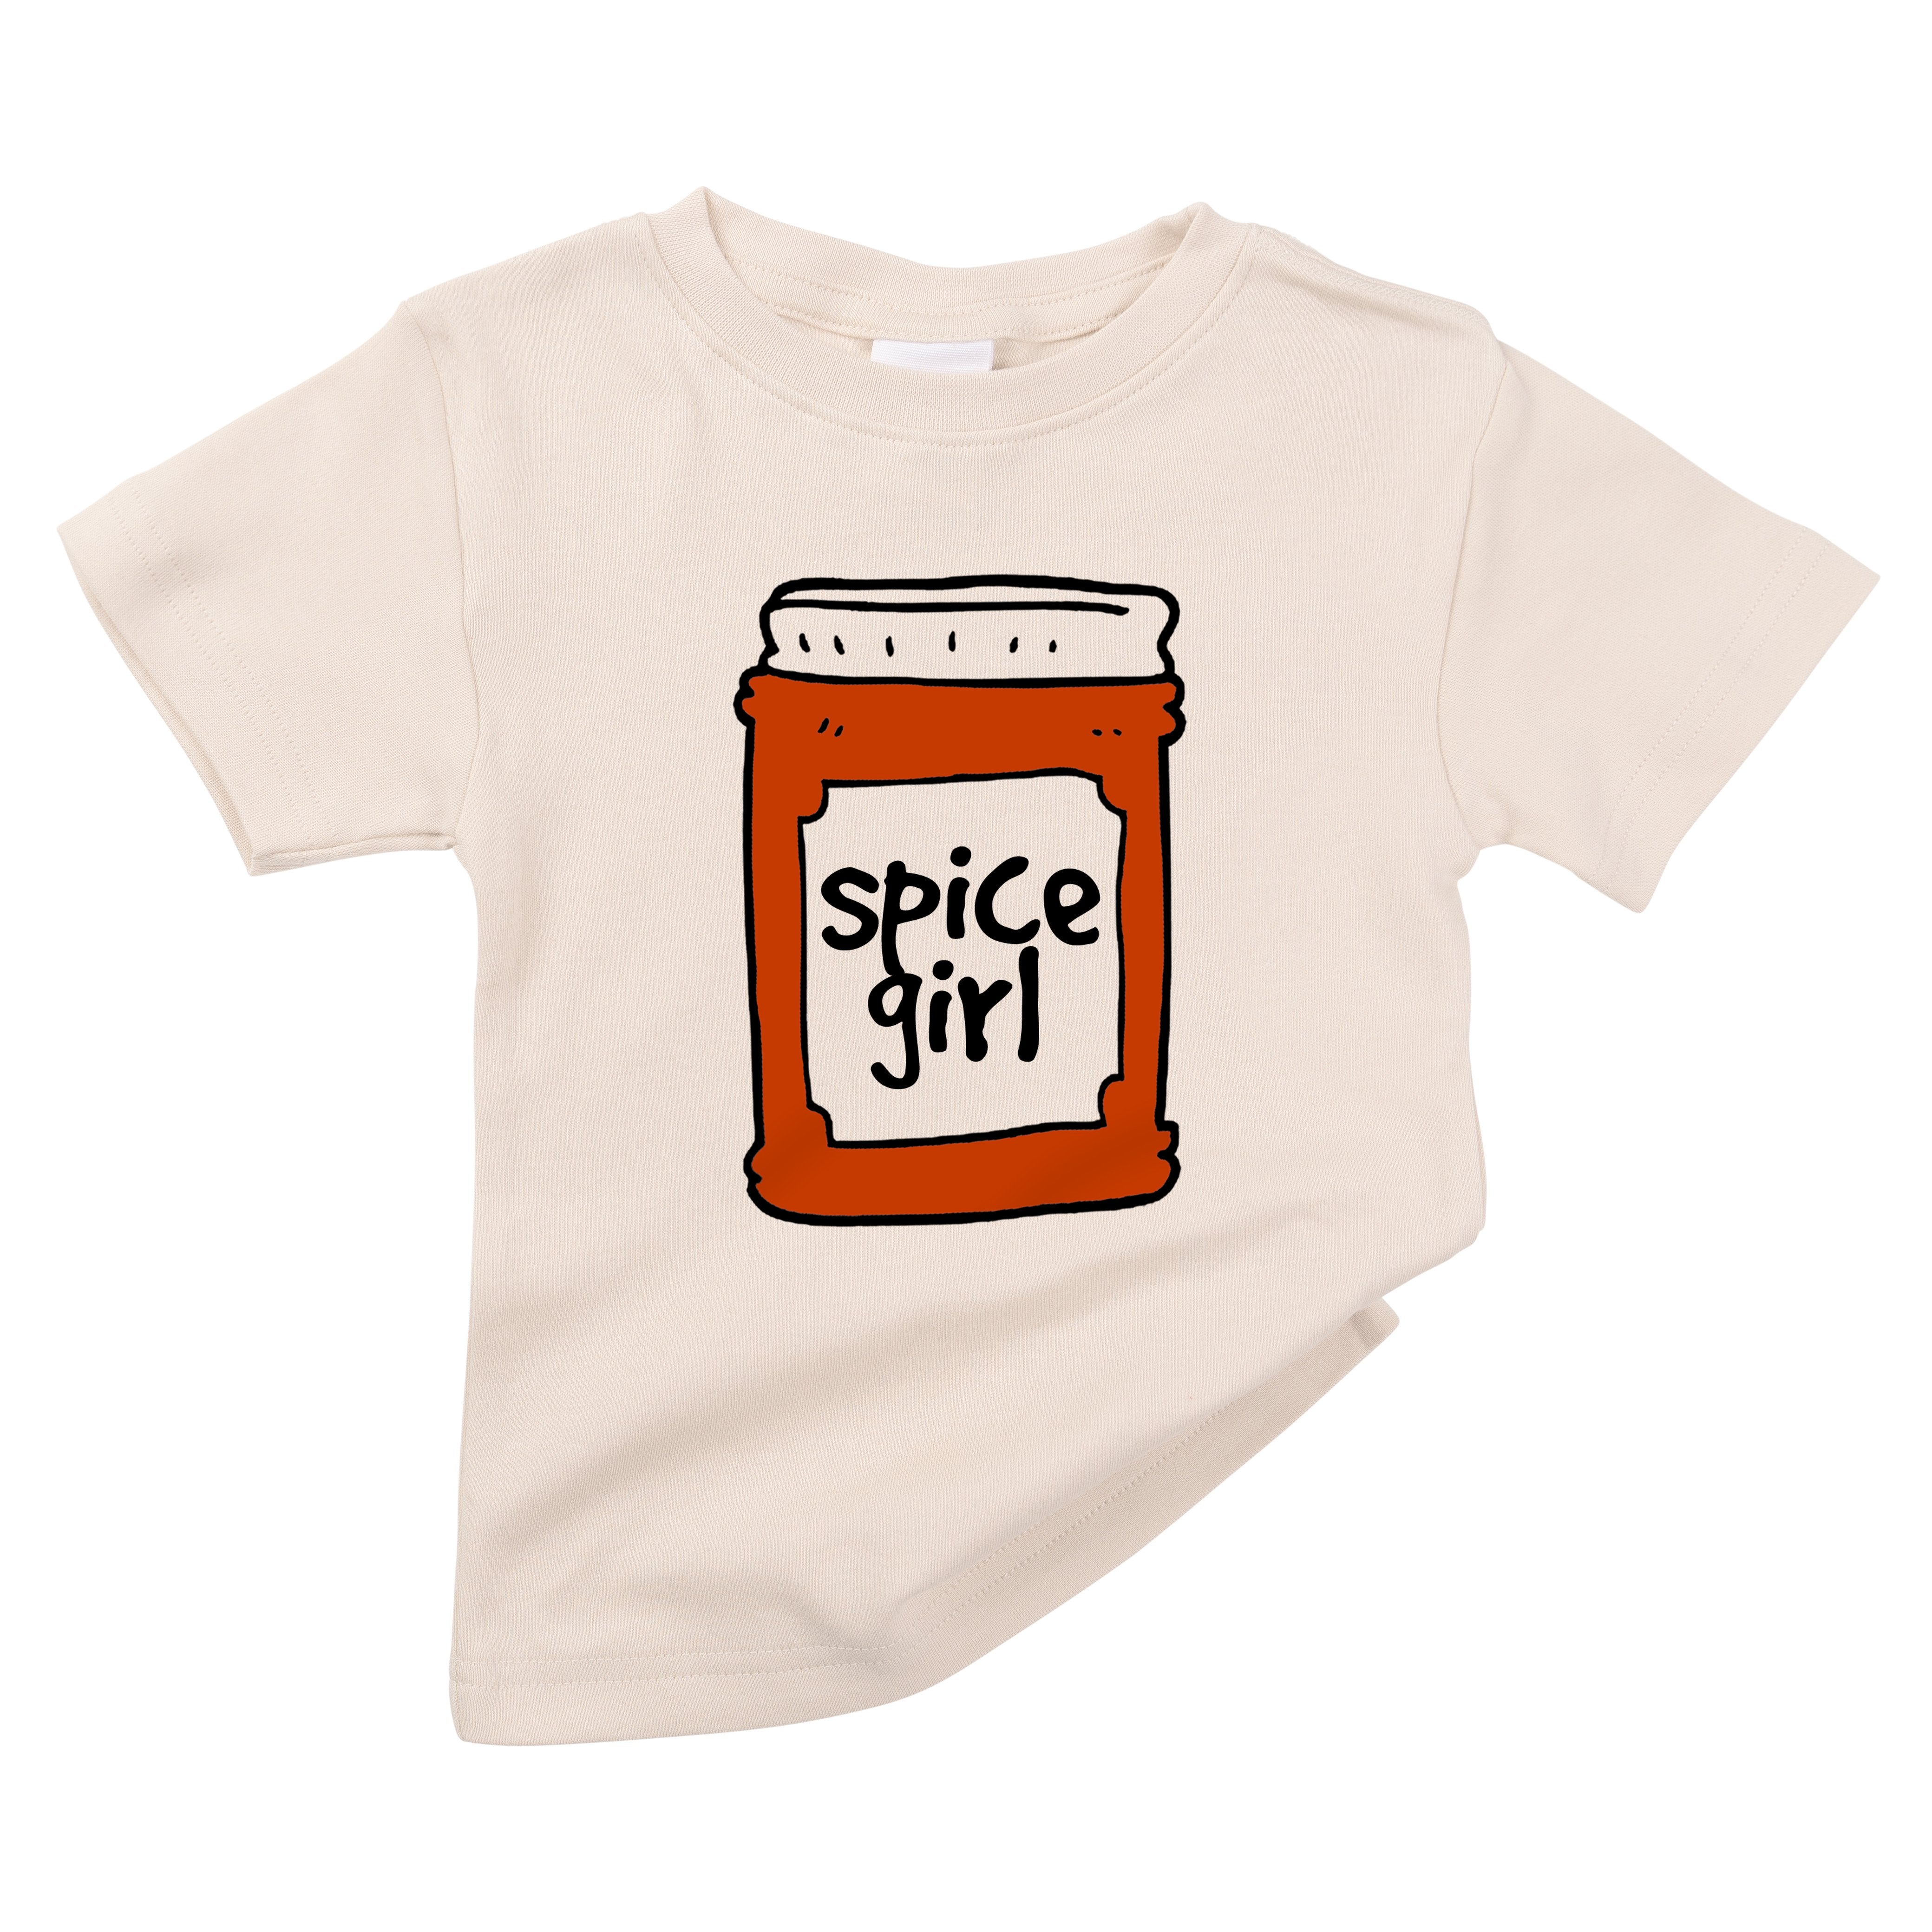 Happy spanks giving' Toddler Organic T-Shirt